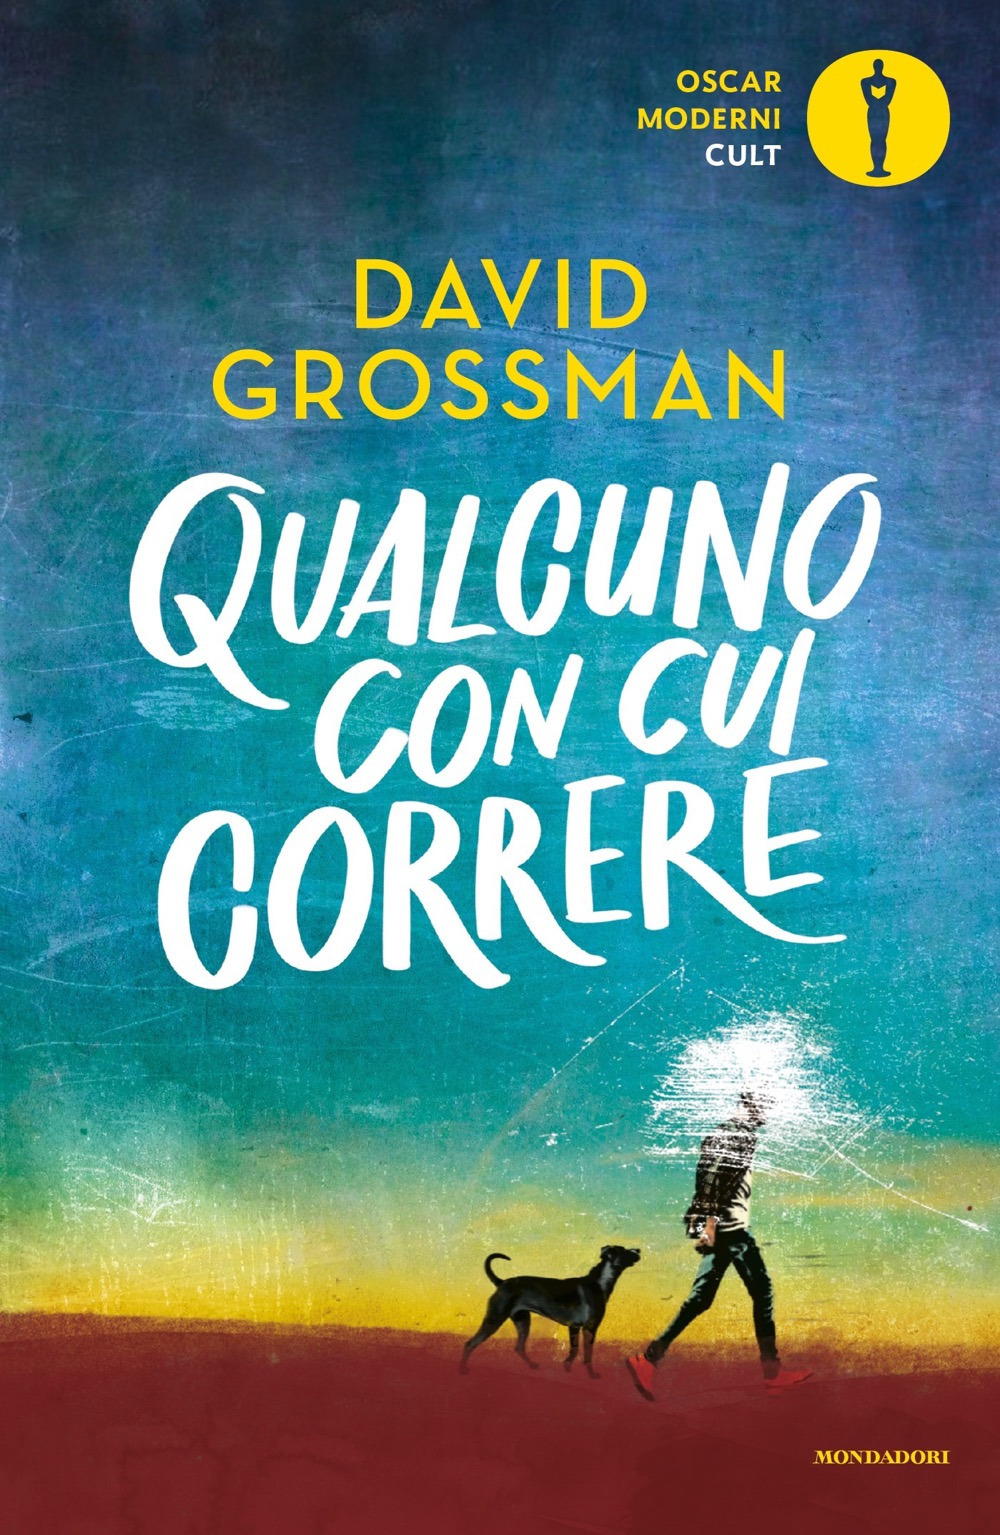 Qualcuno con cui correre - David Grossman - Mondadori